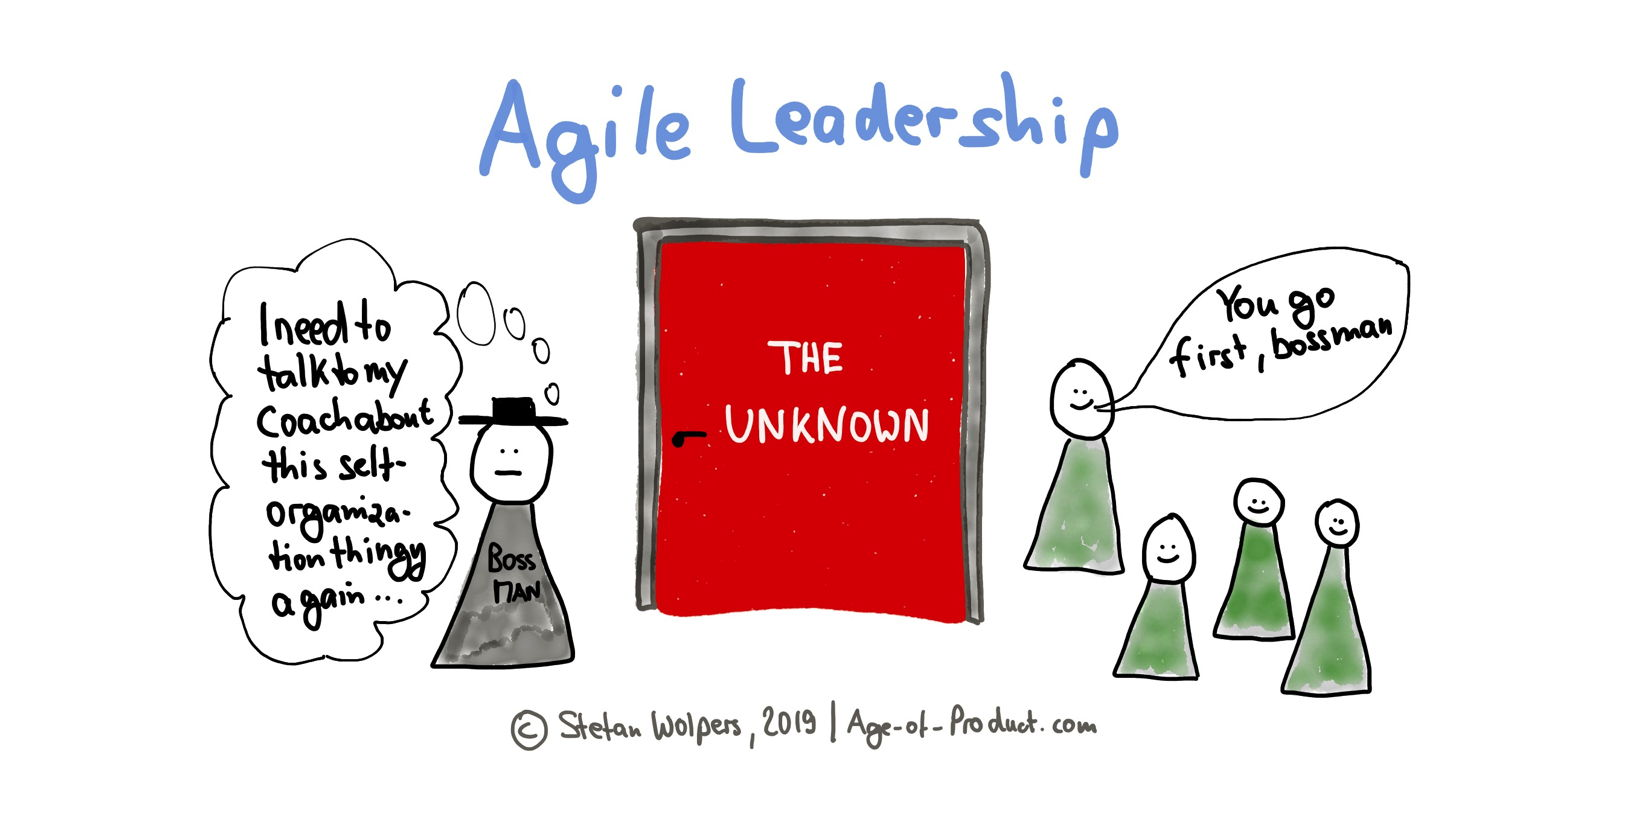 leadership in agile transformation